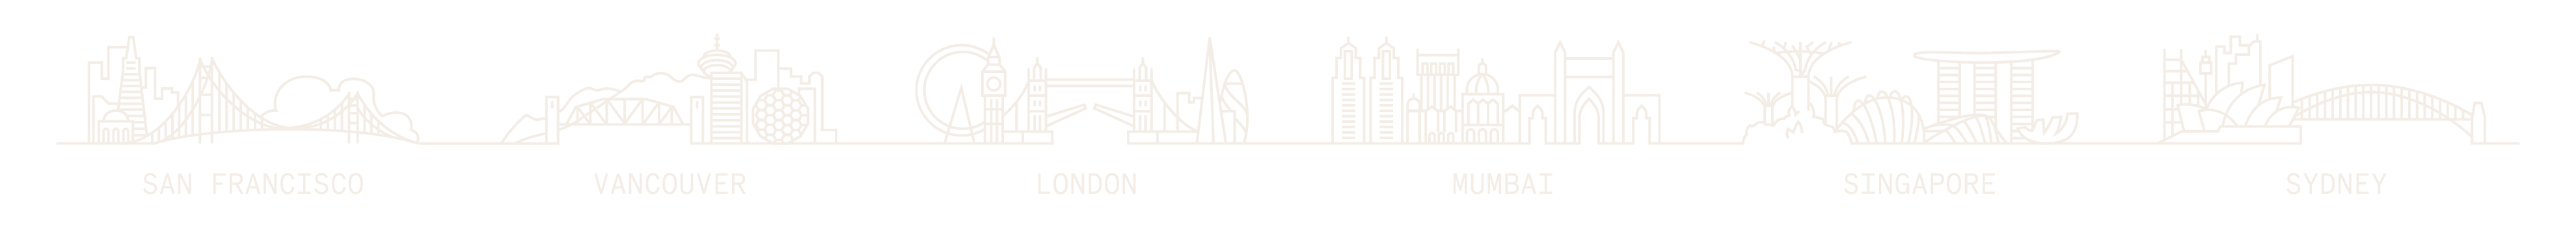 Illustration of the cities that ILM has studios in